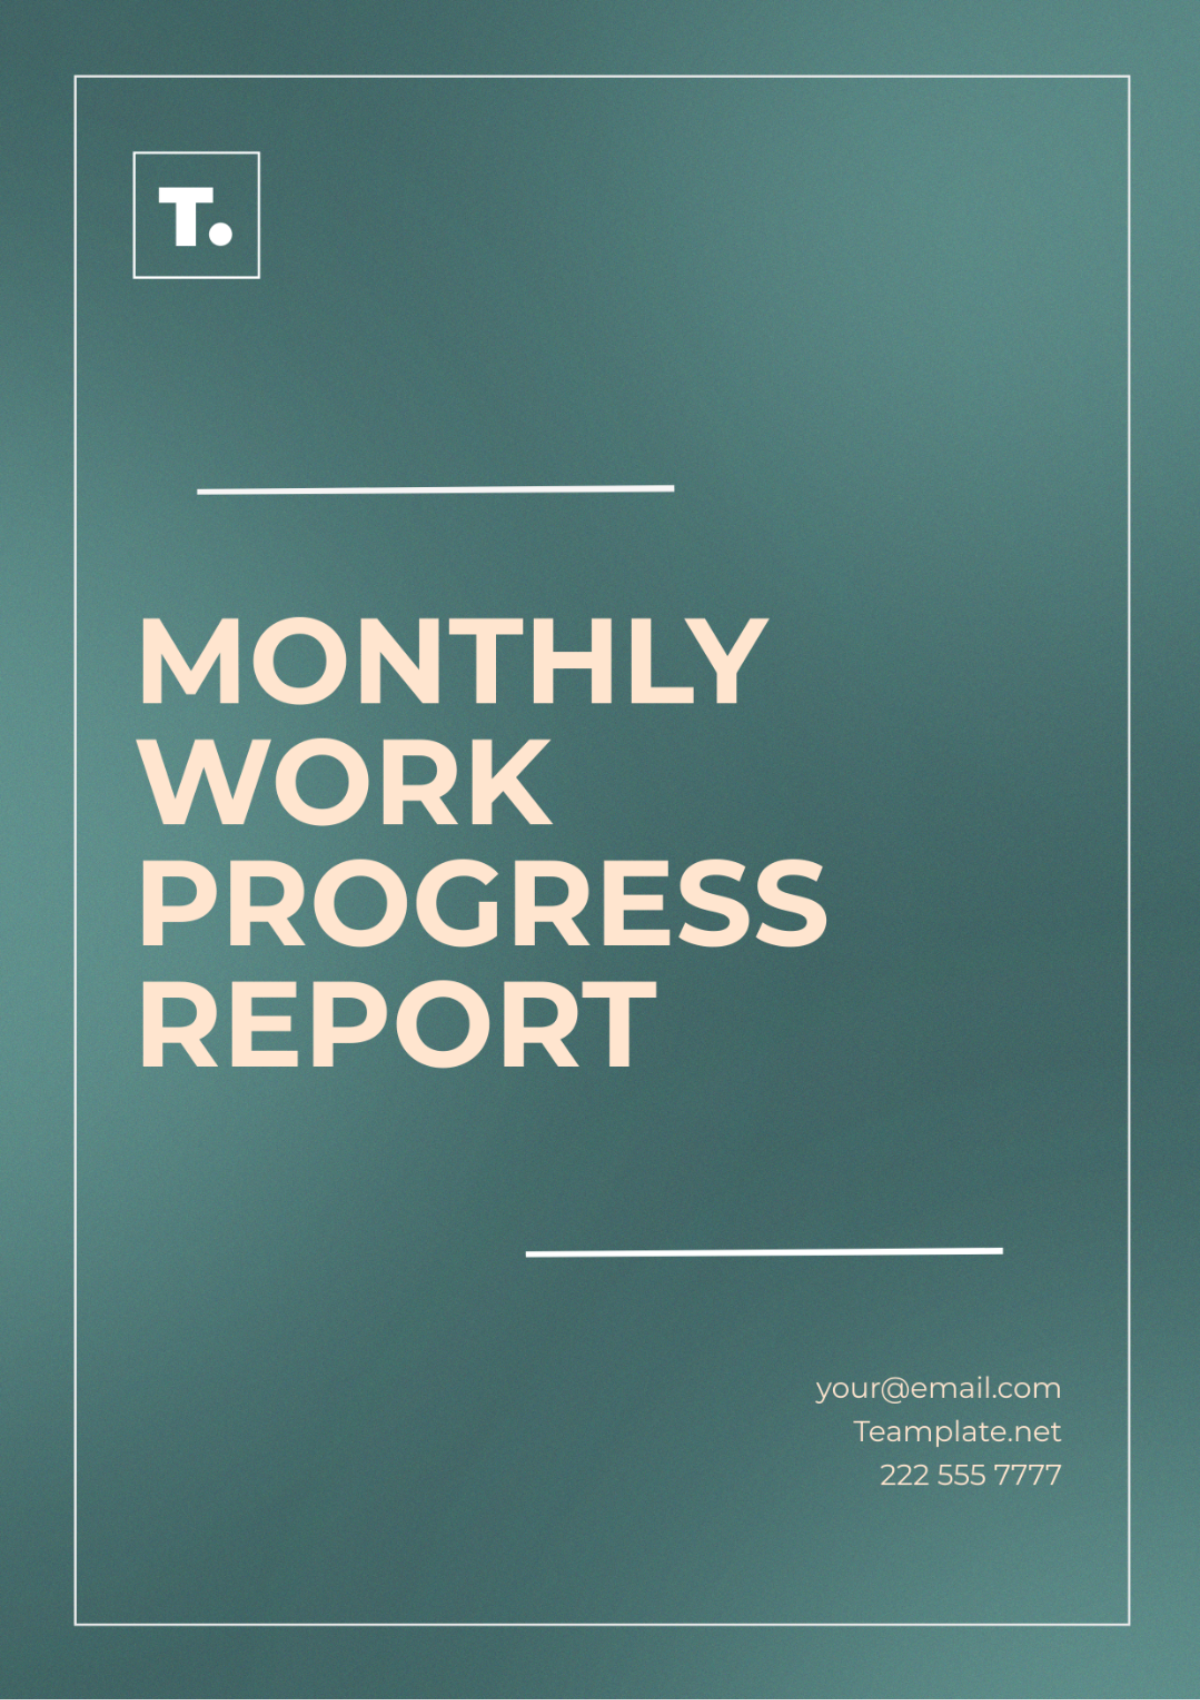 Monthly Work Progress Report Template